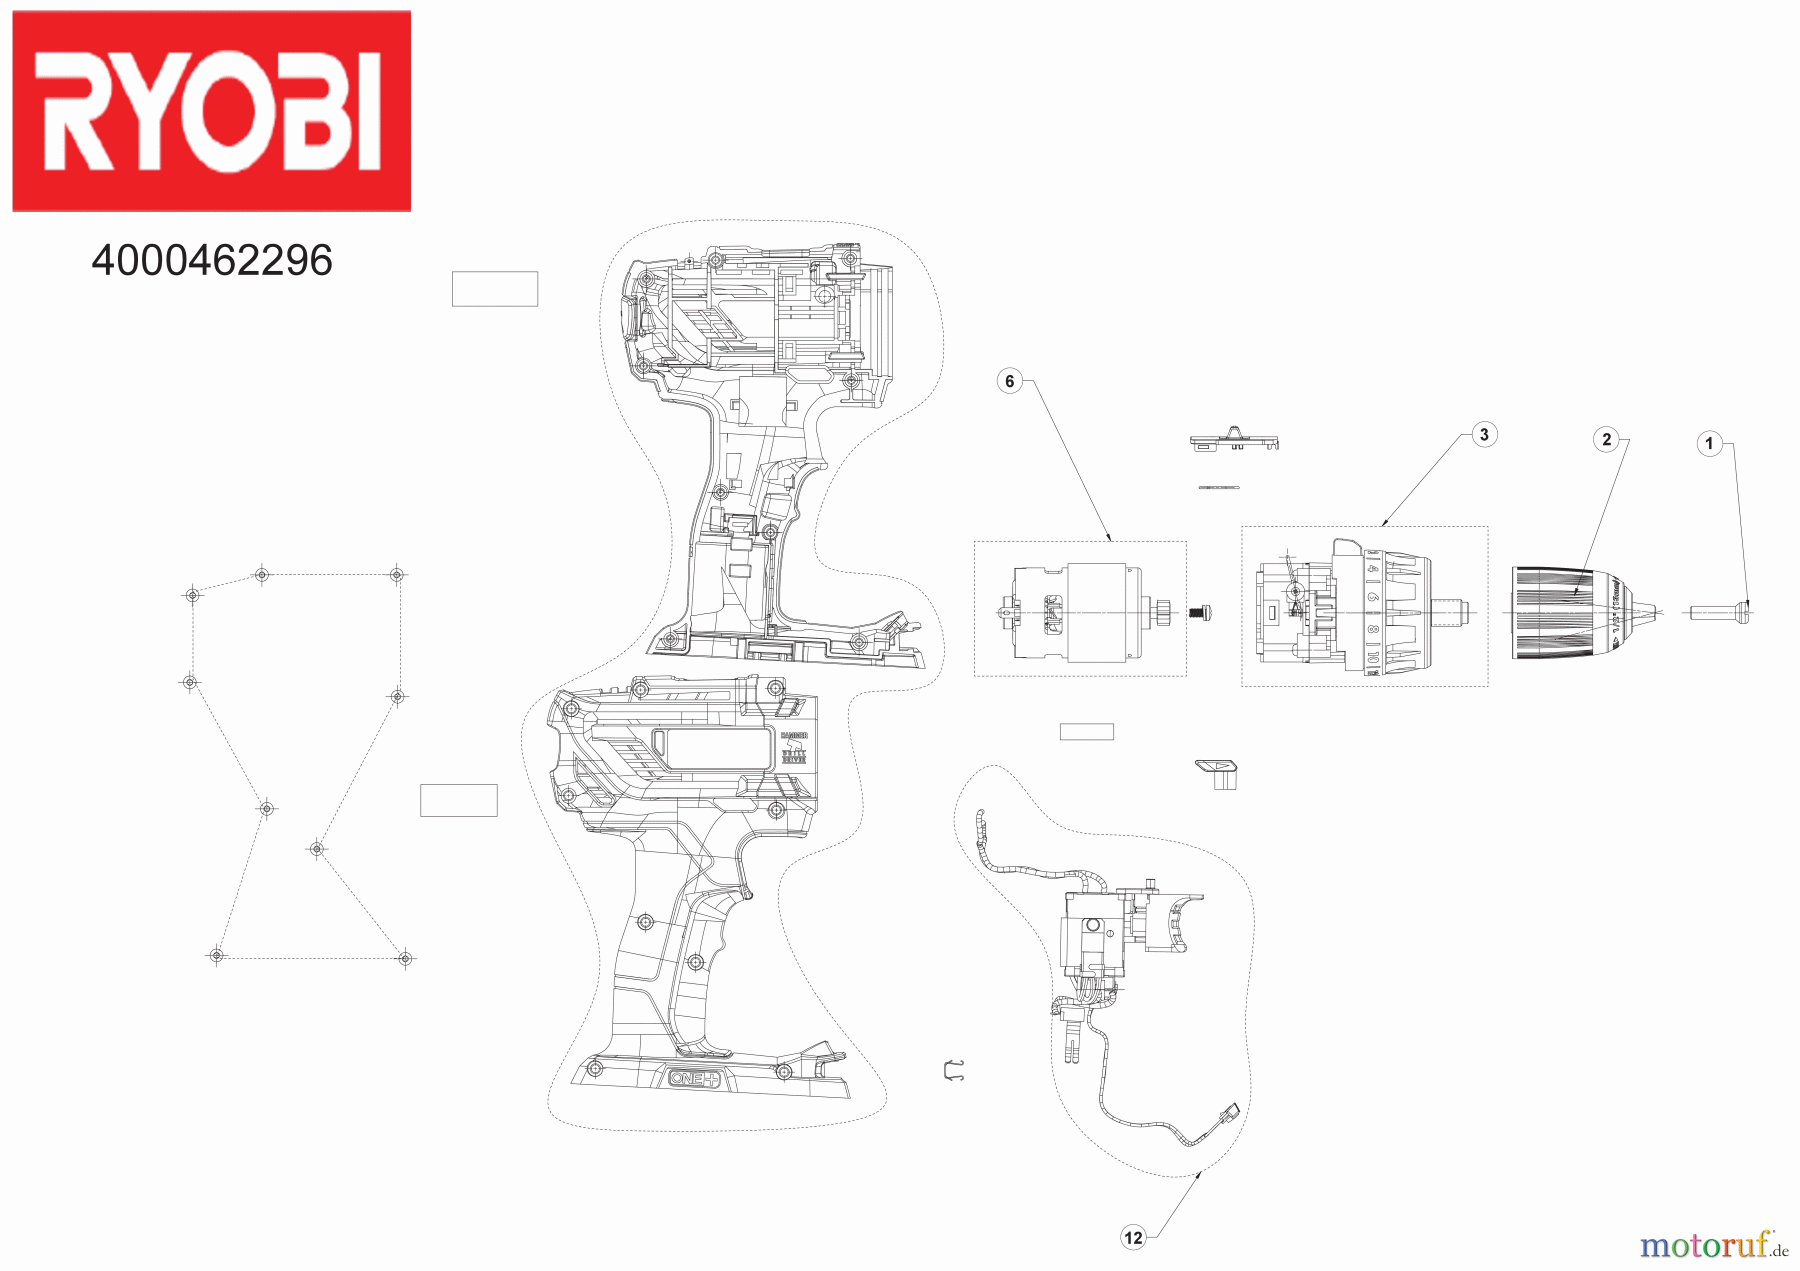  Ryobi (Schlag-)Bohrschrauber Akkuschrauber R18PD3-0 18 V 2-Gang Akku-Schlagbohrschrauber Seite 1